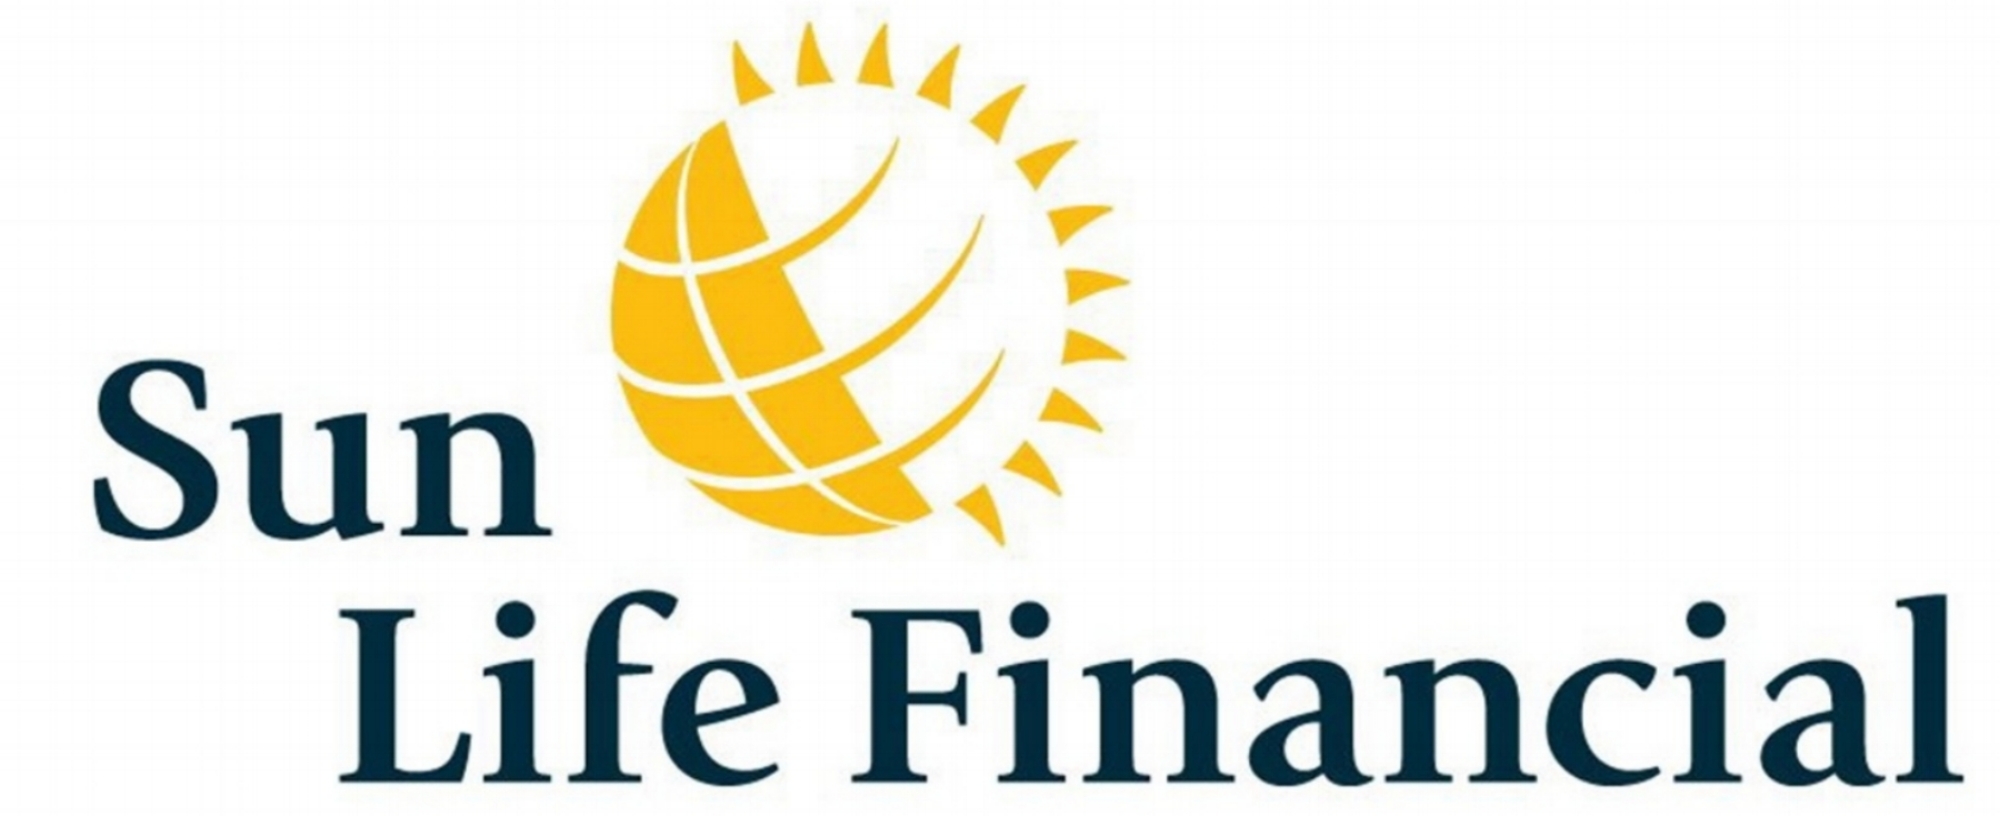 Sunlife Financial .jpg